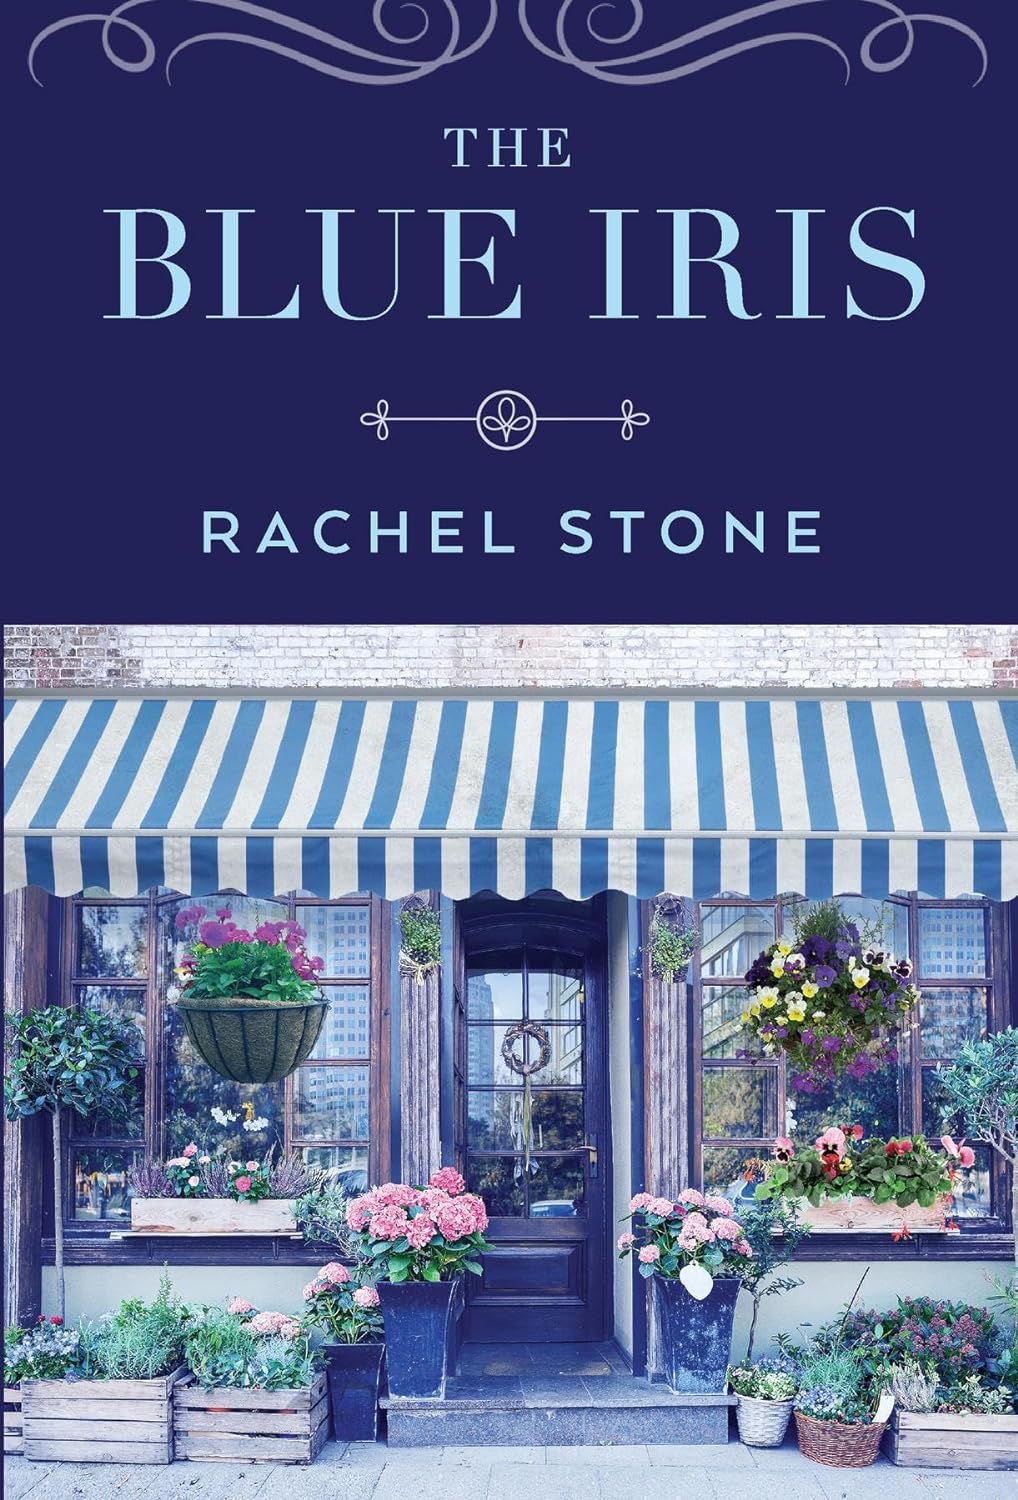 The Blue Iris by Rachel Stone